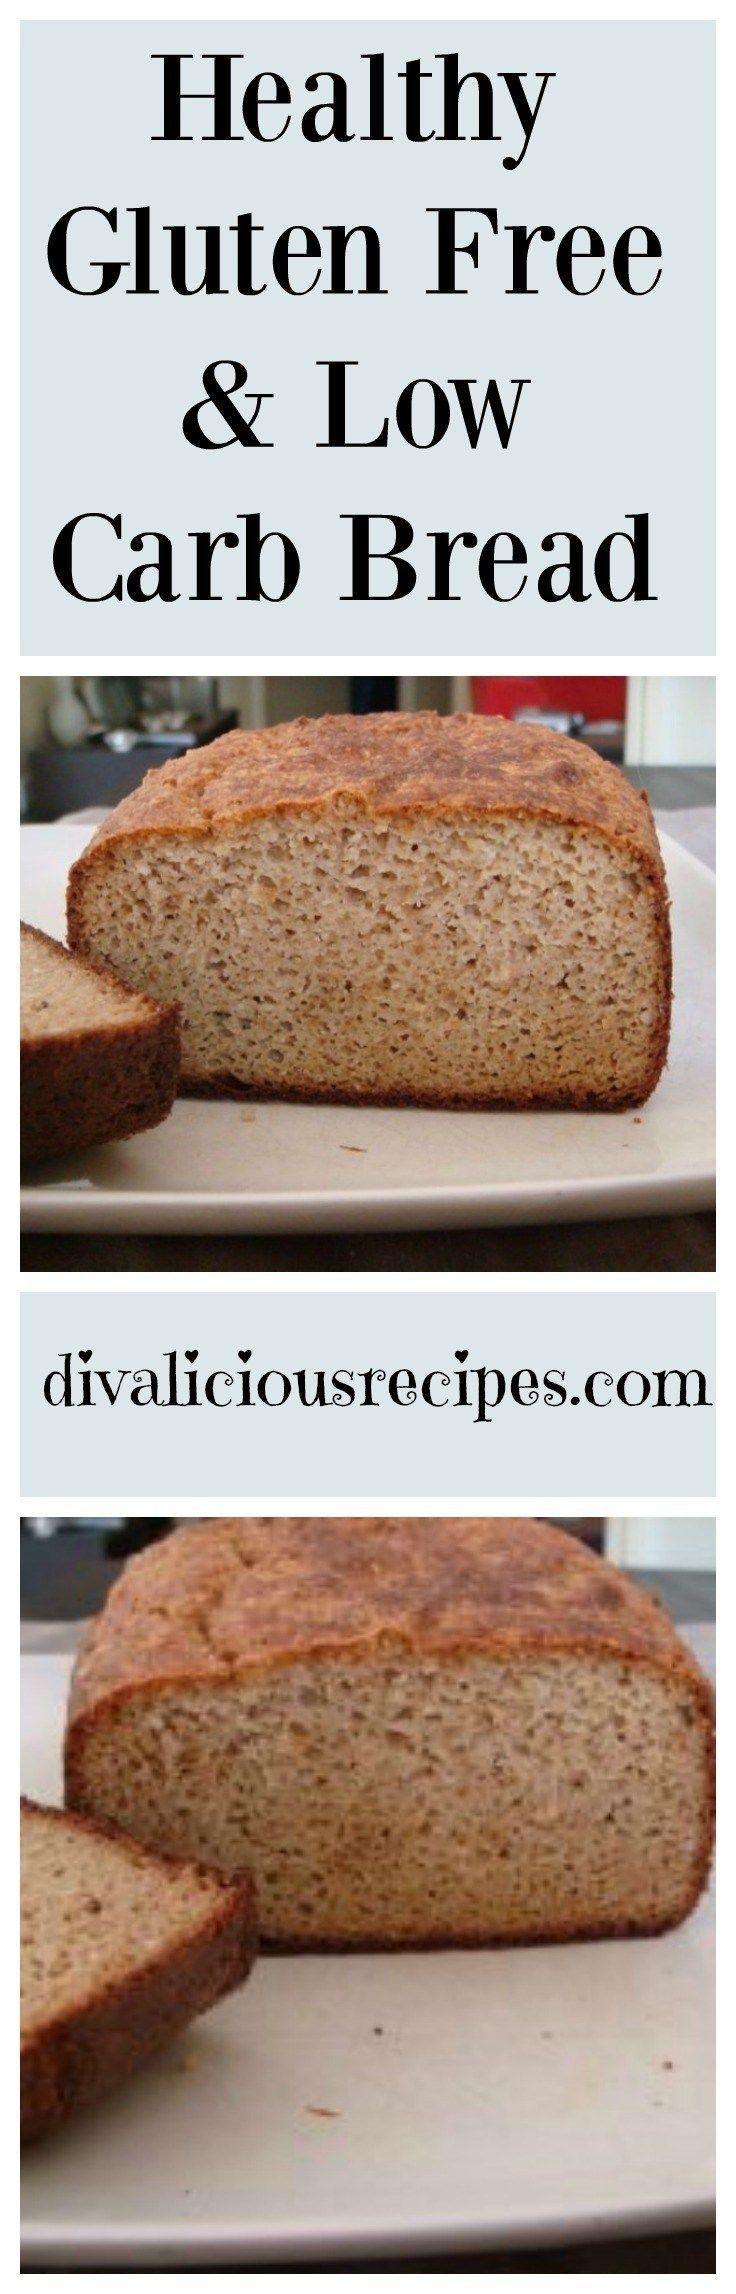 Low Carb Healthy Bread
 Healthy Gluten Free & Low Carb Bread Recipe